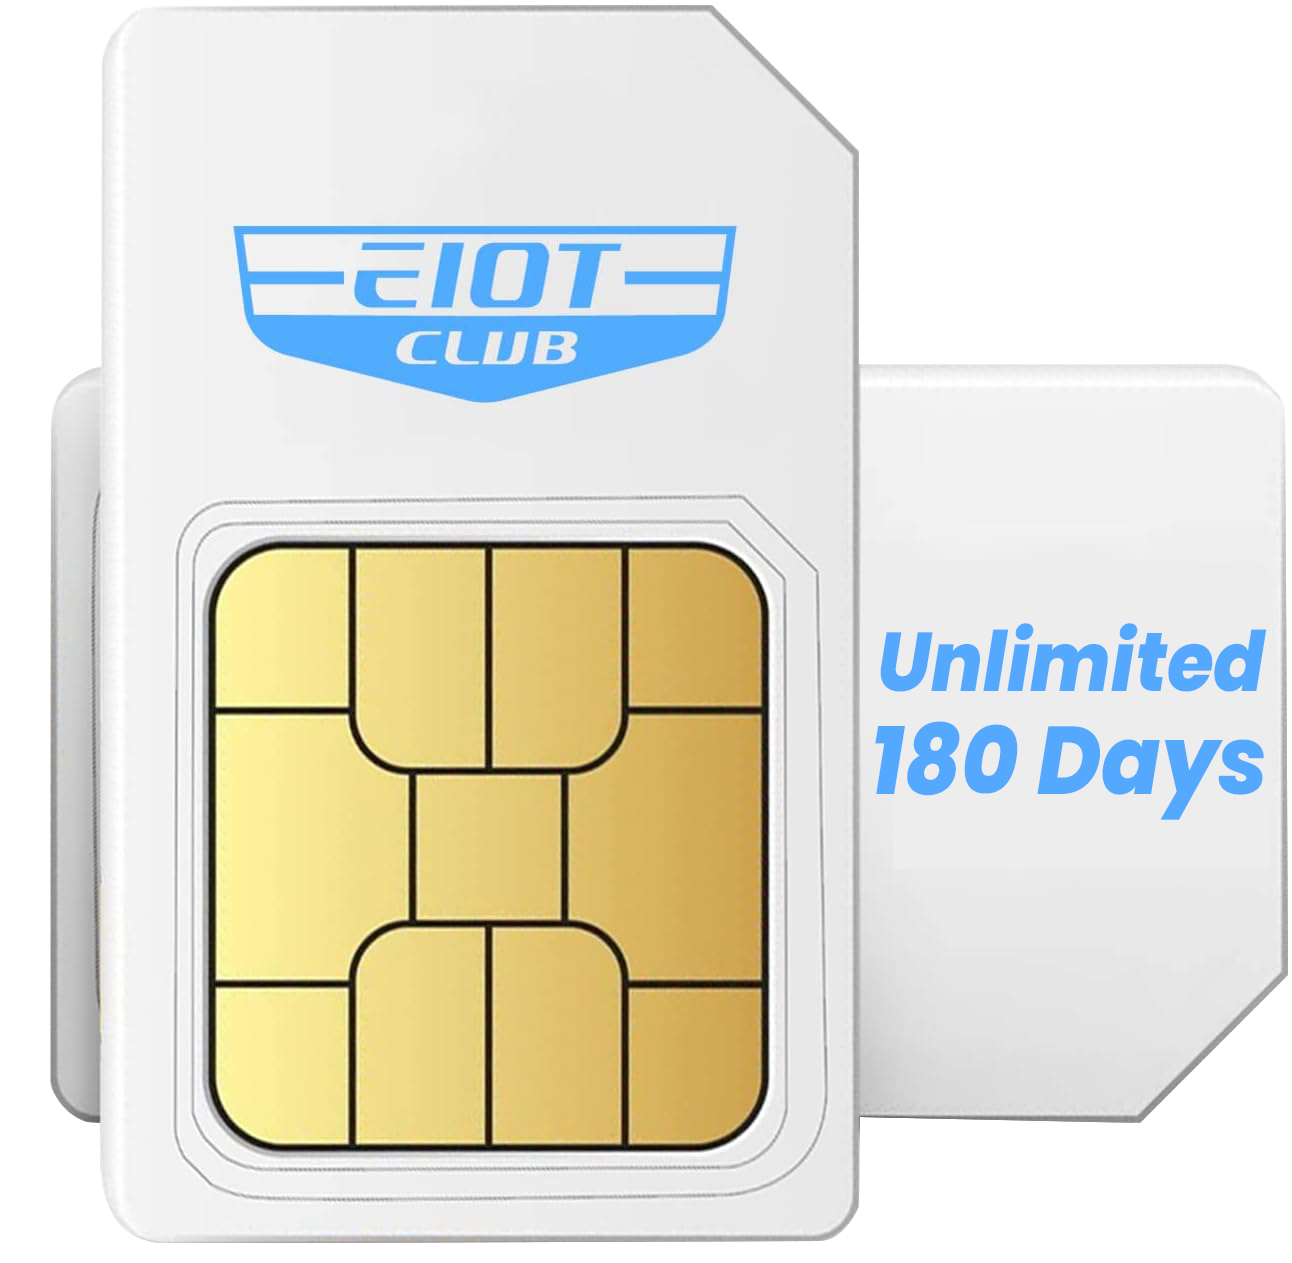 UBox EIOTCLUB SIM card data (EU only) - 6 month Unlimited data